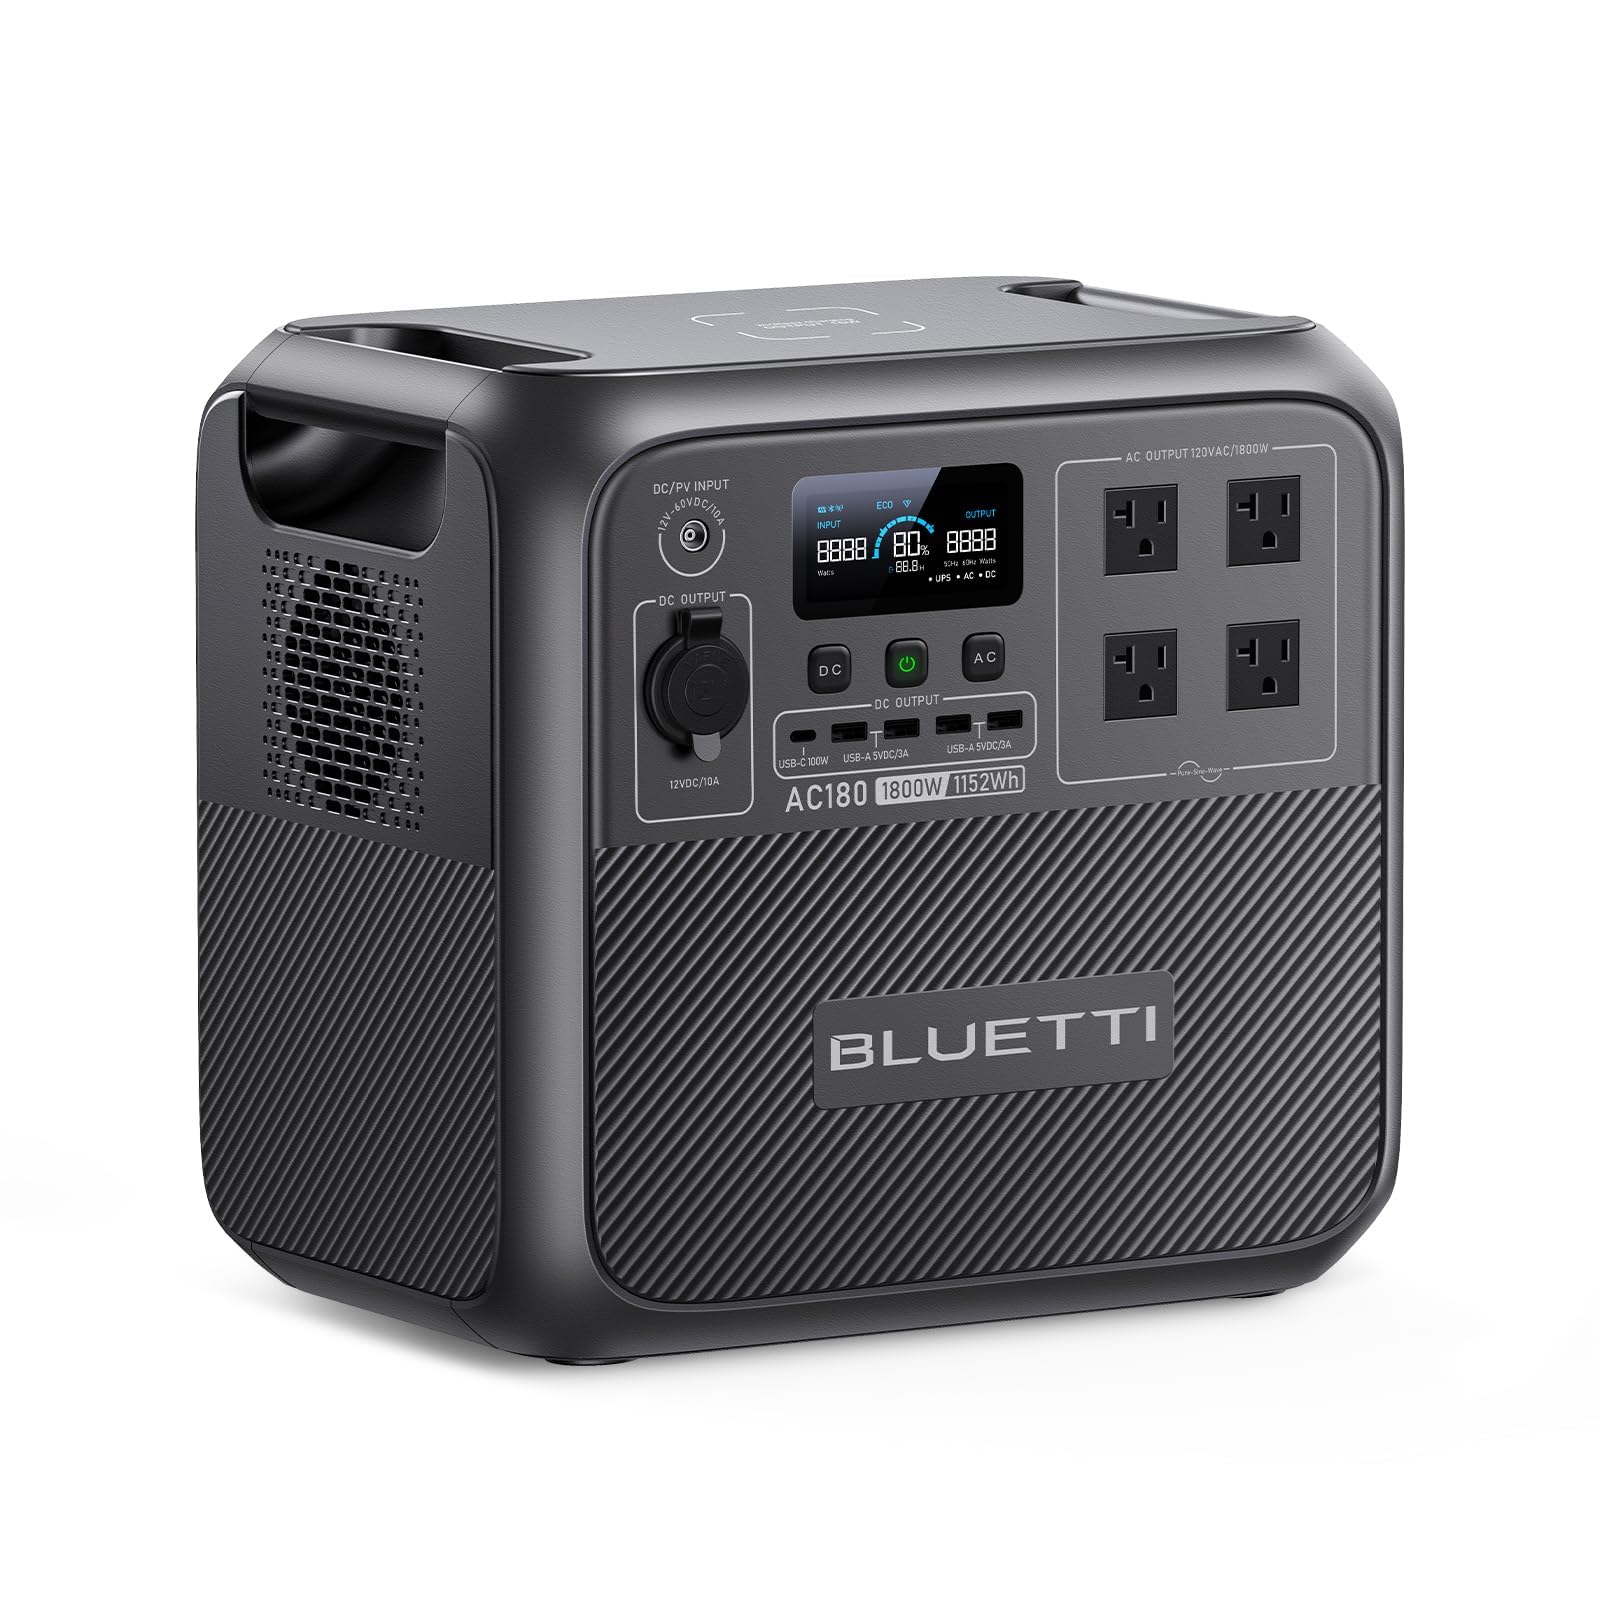 BLUETTI Portable Power Station AC180 $629